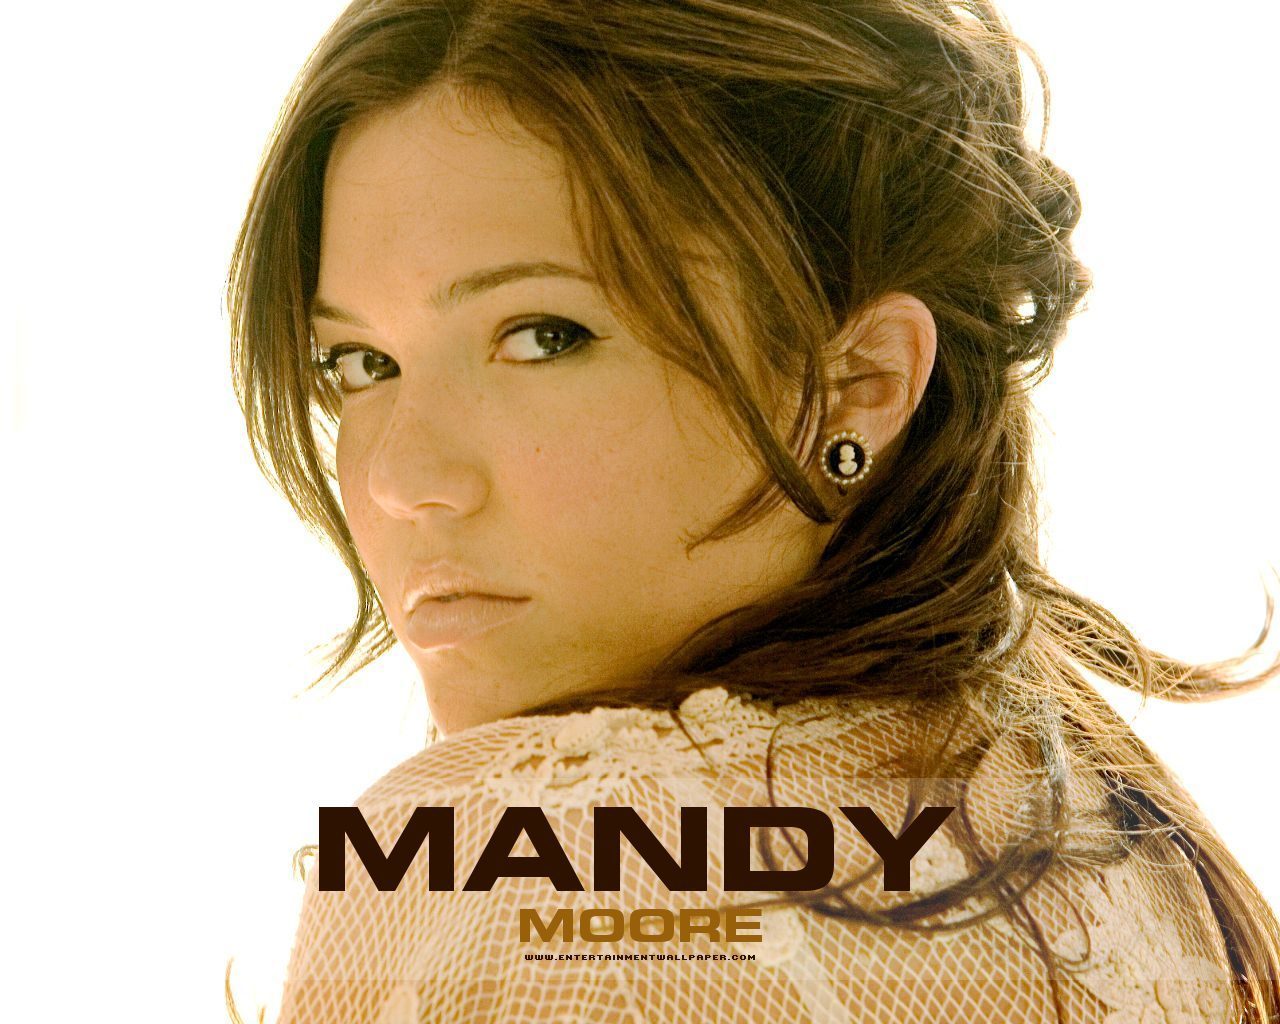 mandy - Mandy Moore Wallpaper (16969038) - Fanpop